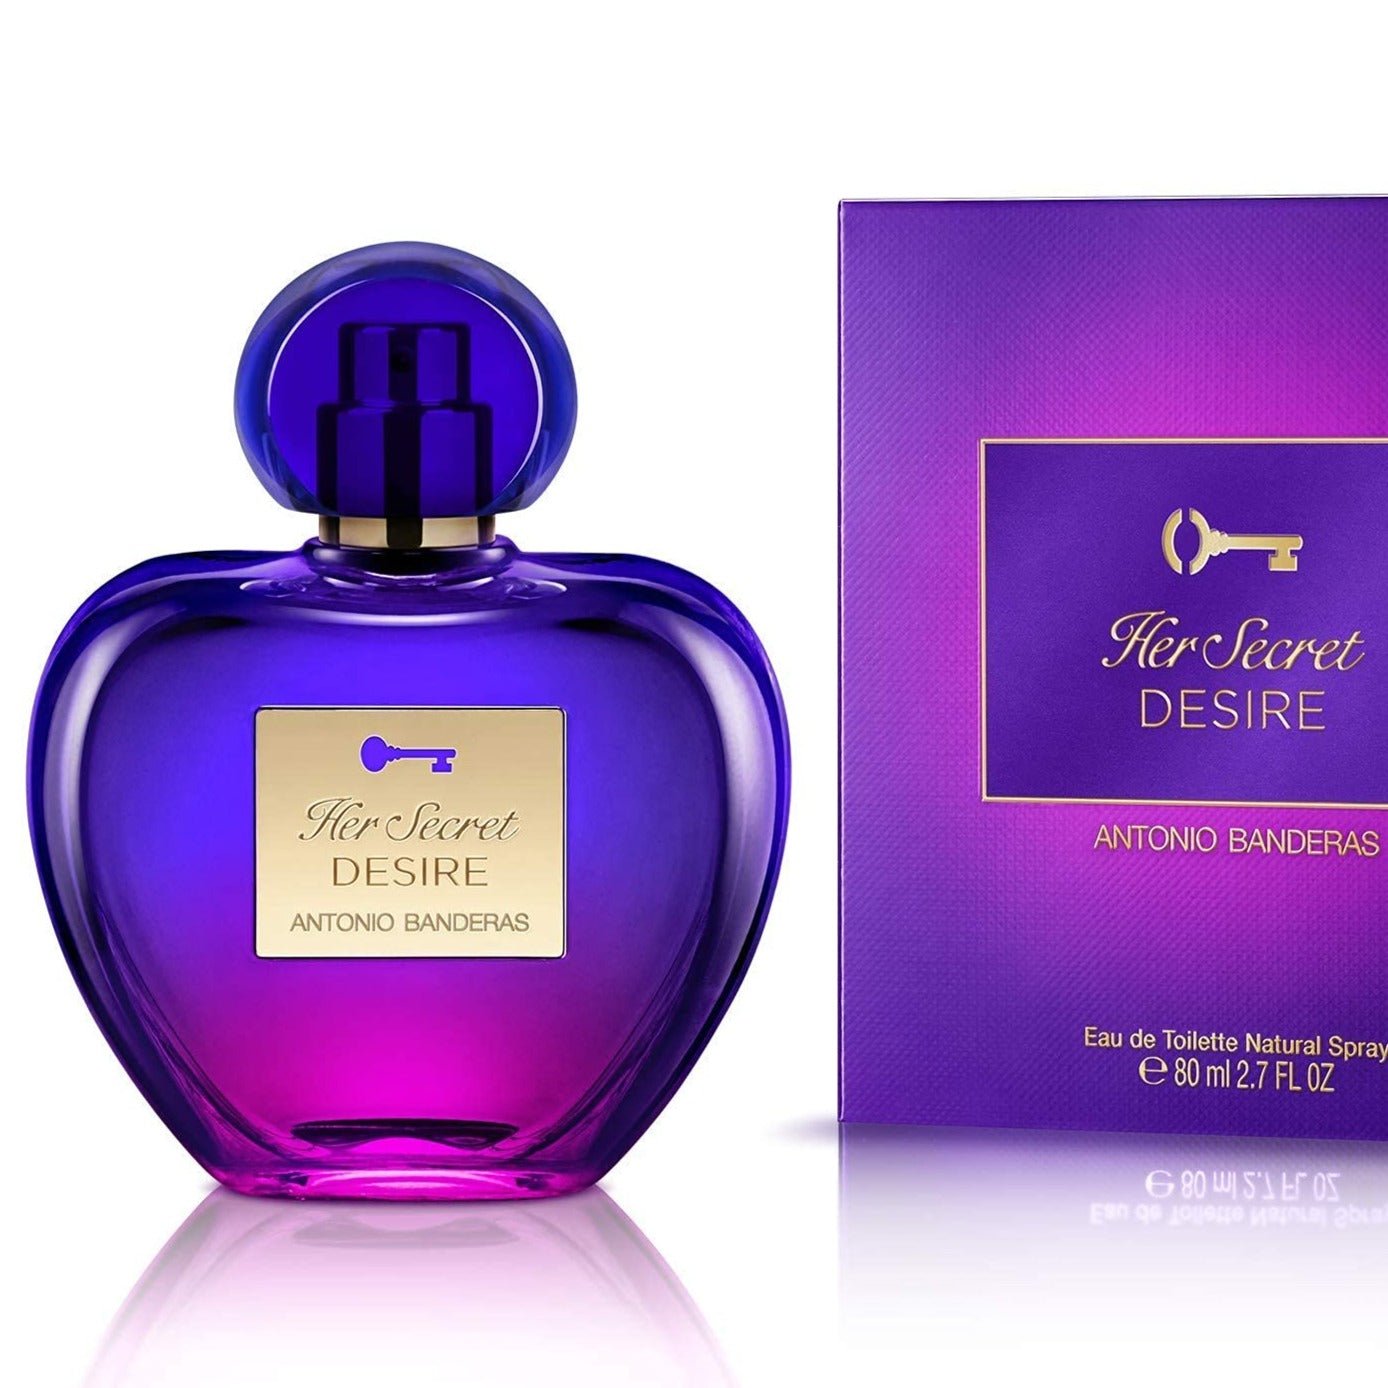 Antonio Banderas Seduction Doses Her Secret Desire EDT | My Perfume Shop Australia